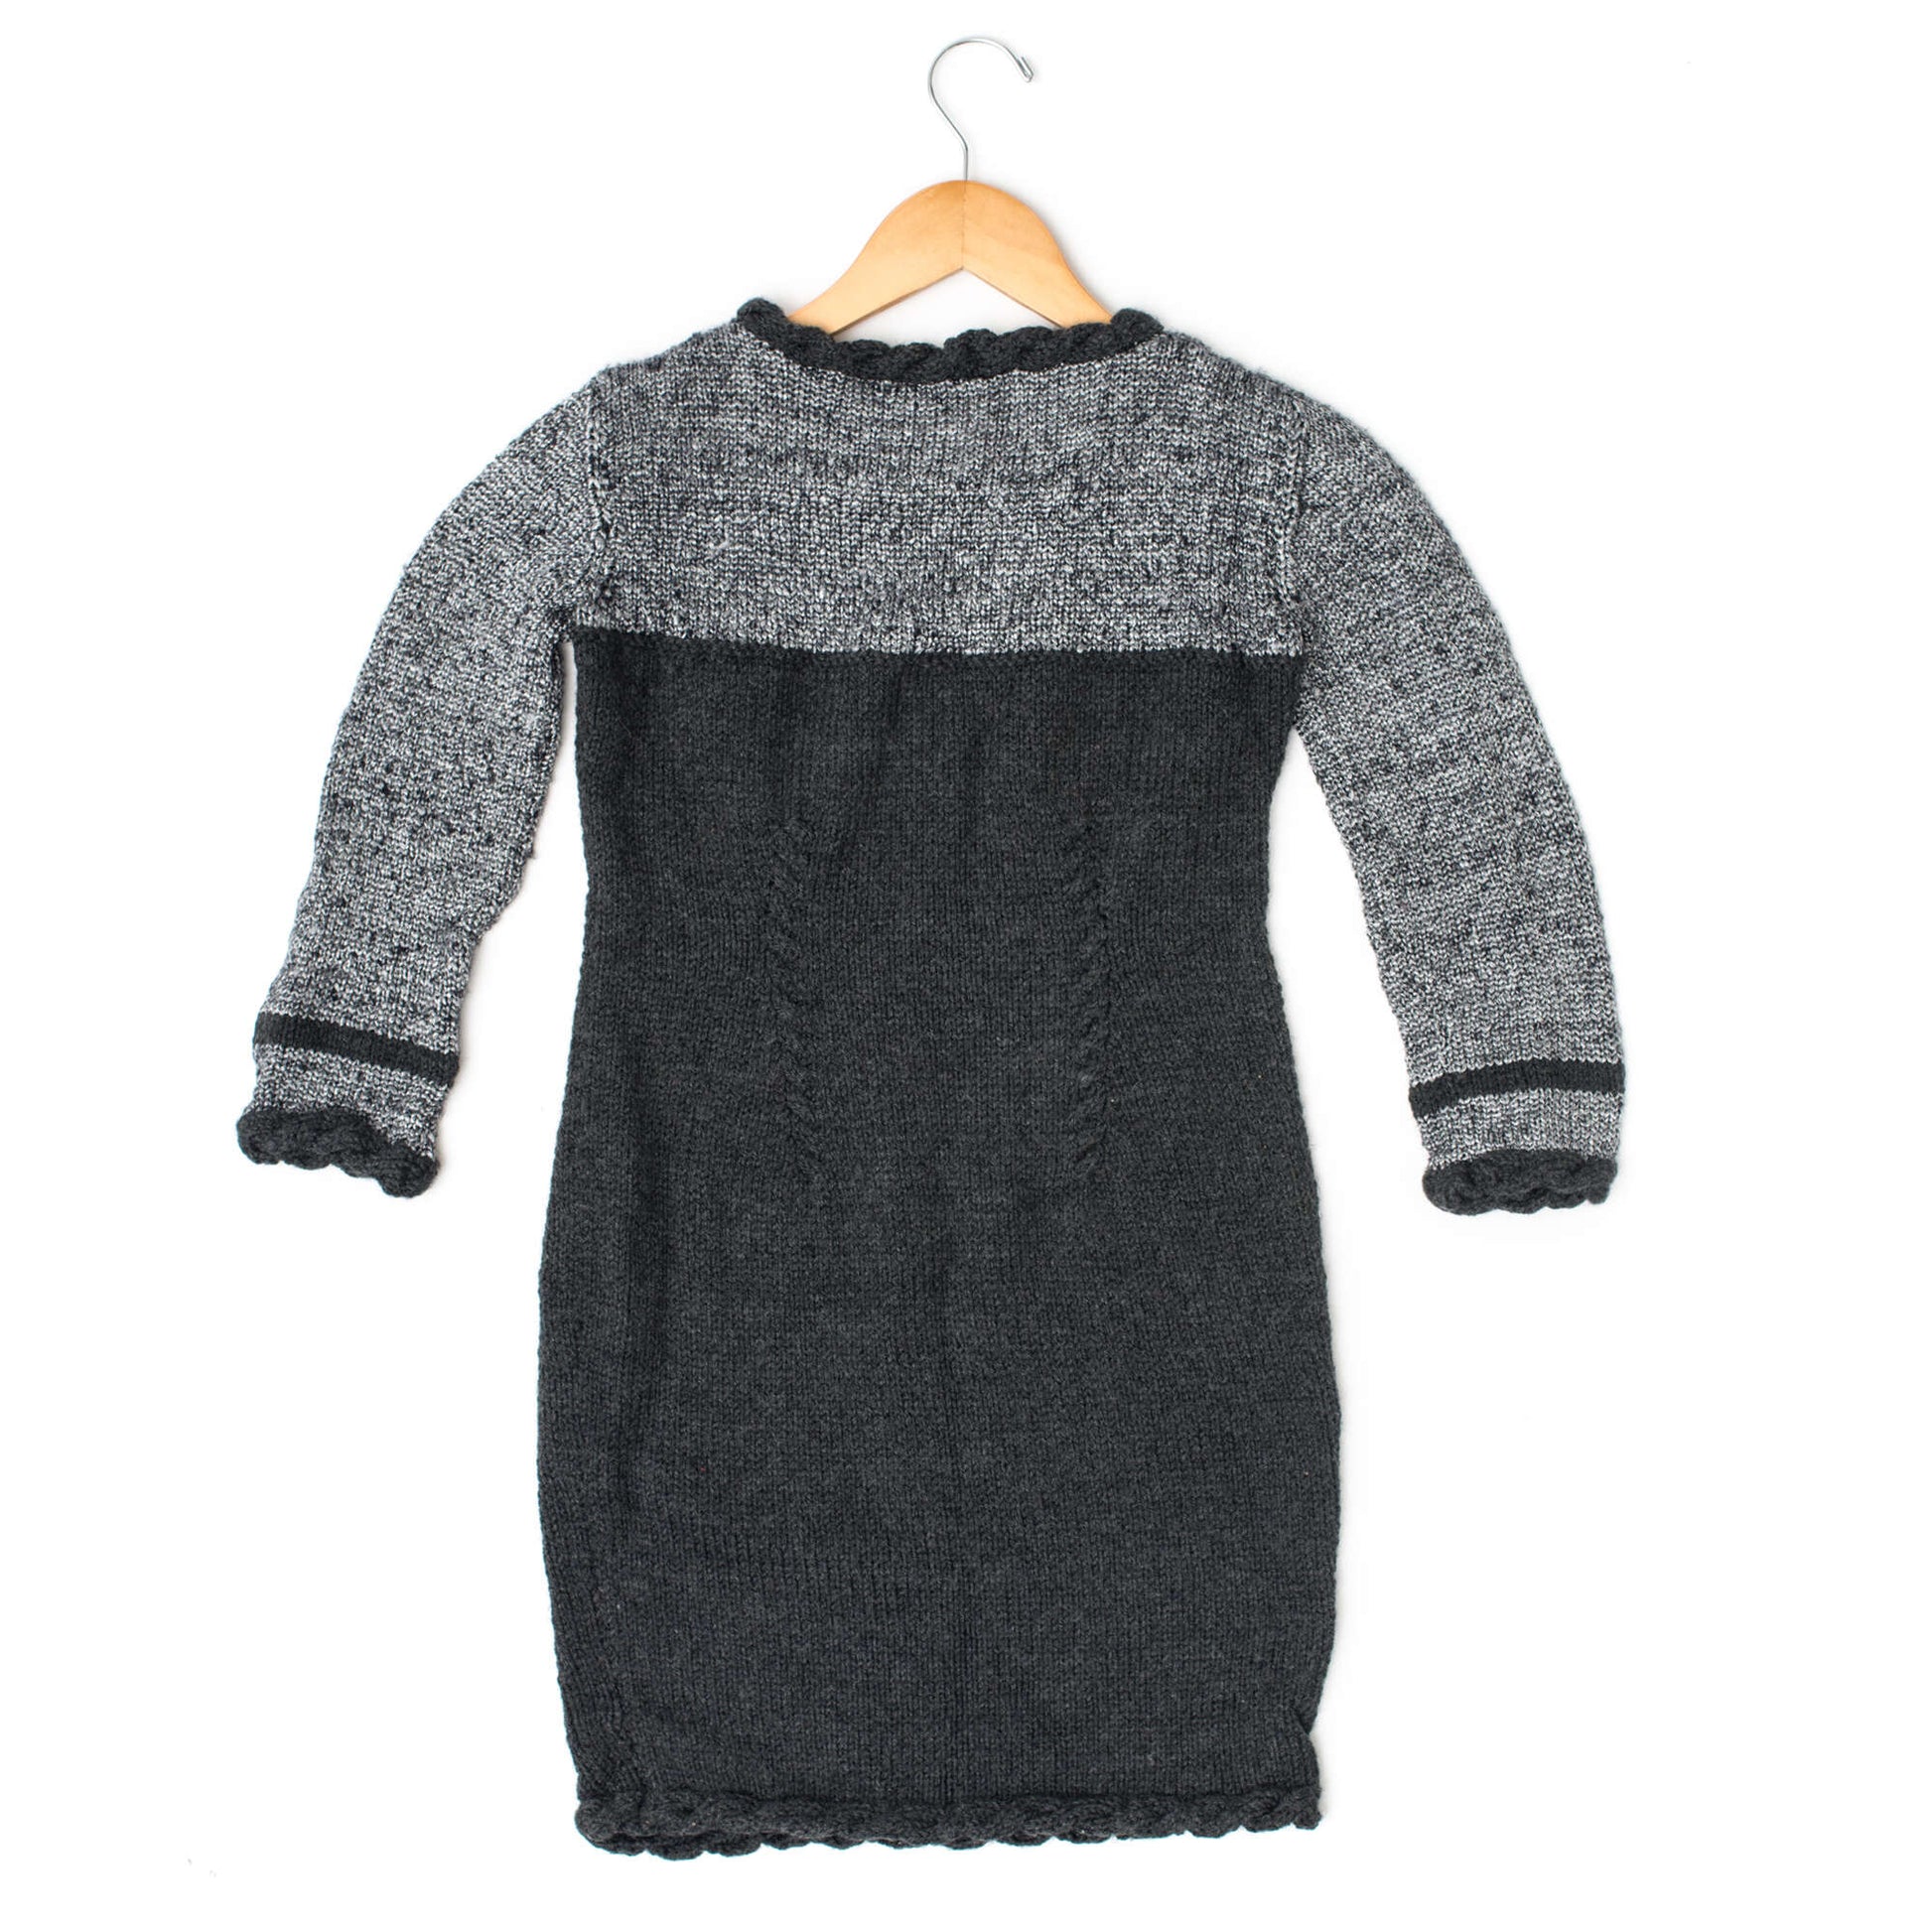 Free Patons Knit Little Black Dress Pattern